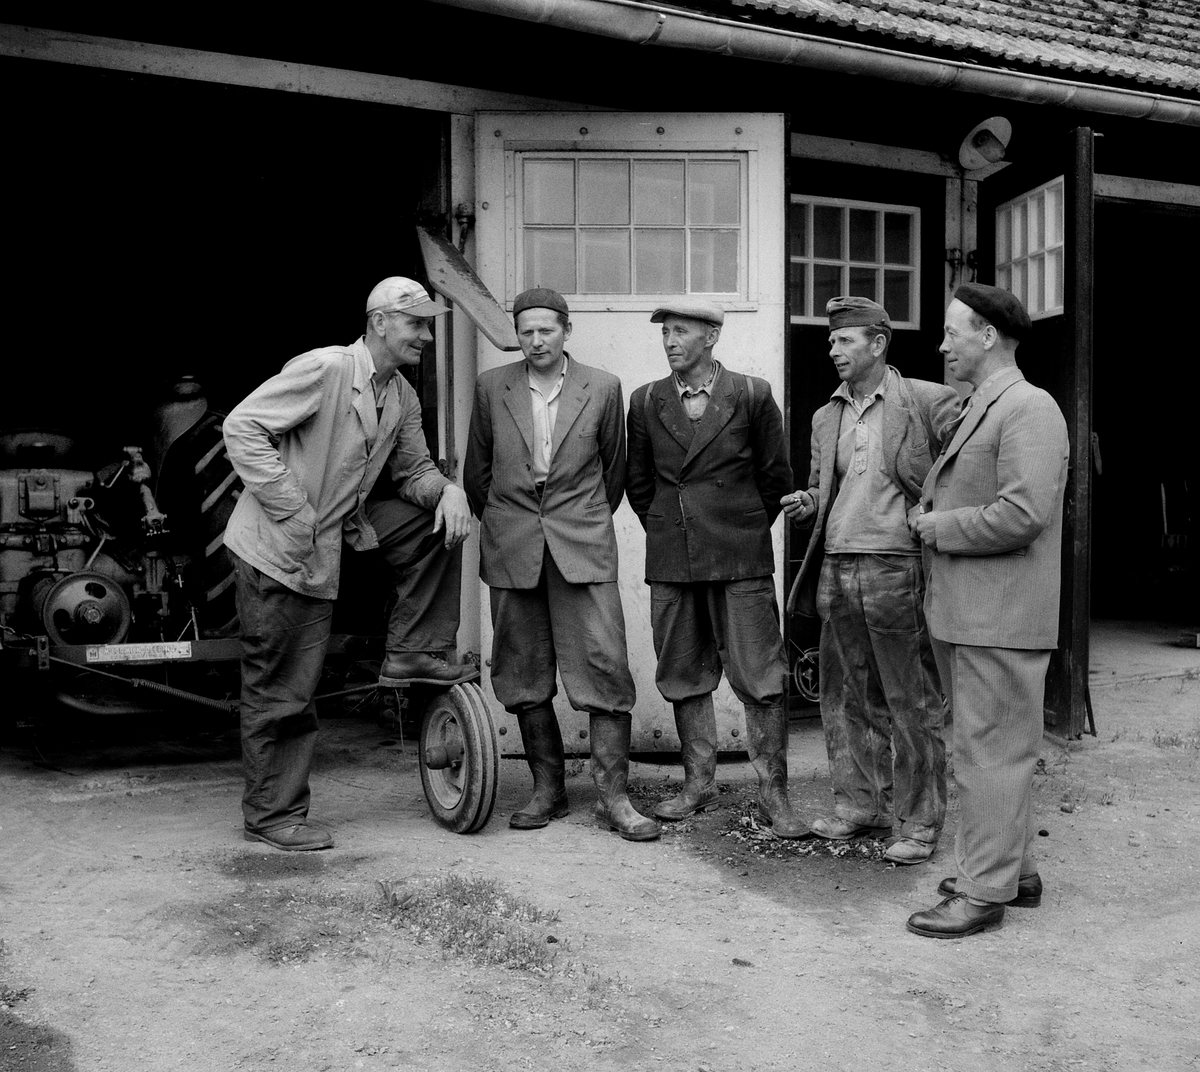 Arbetare på Ryds gård, 1956.